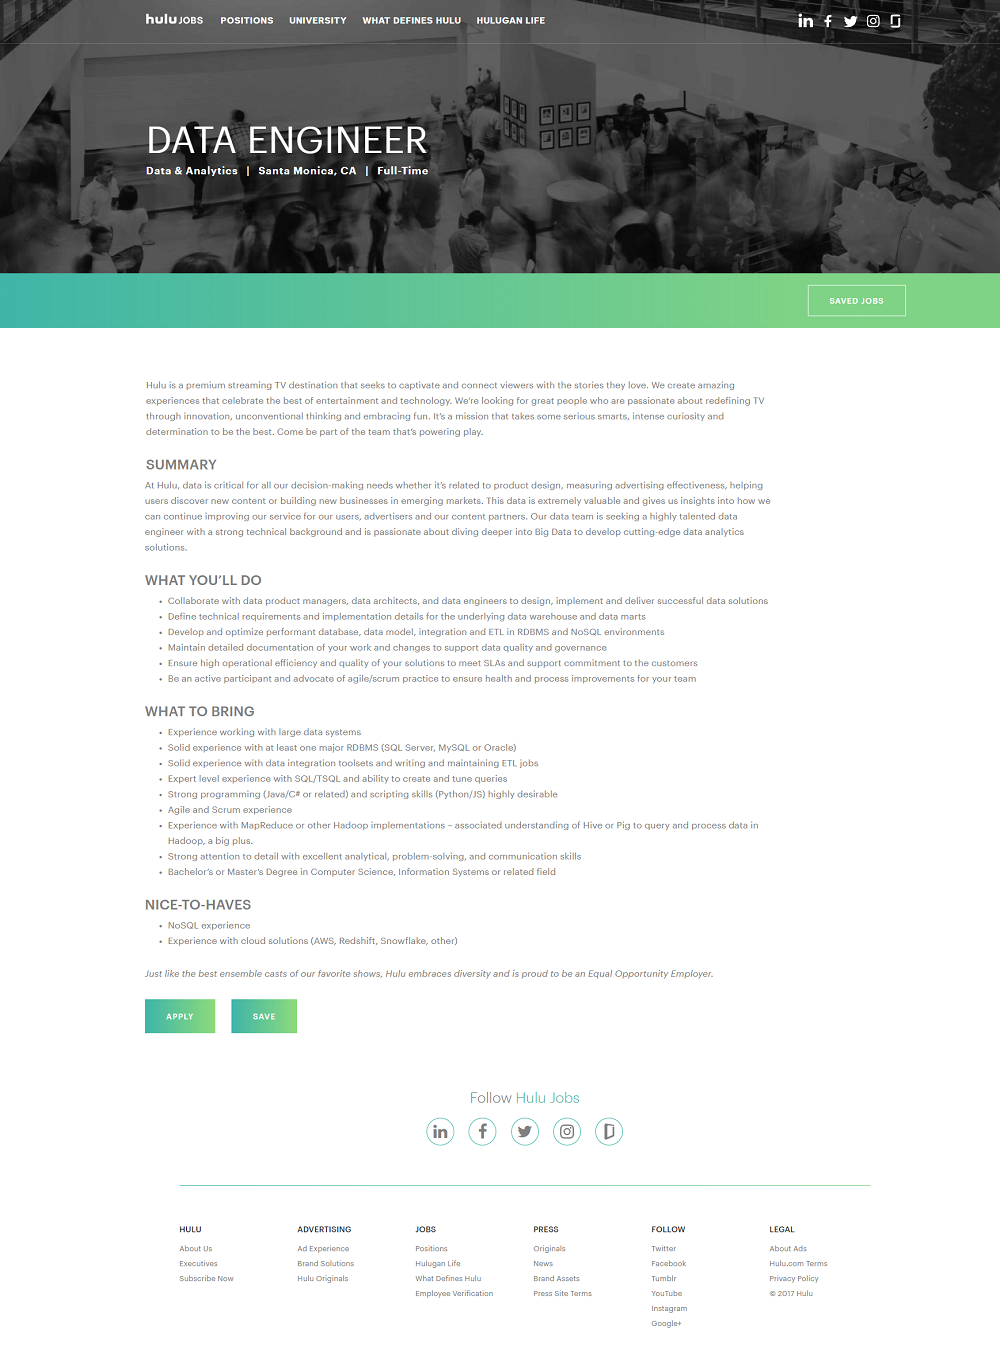 Hulu Jobvite ATS job page overlay